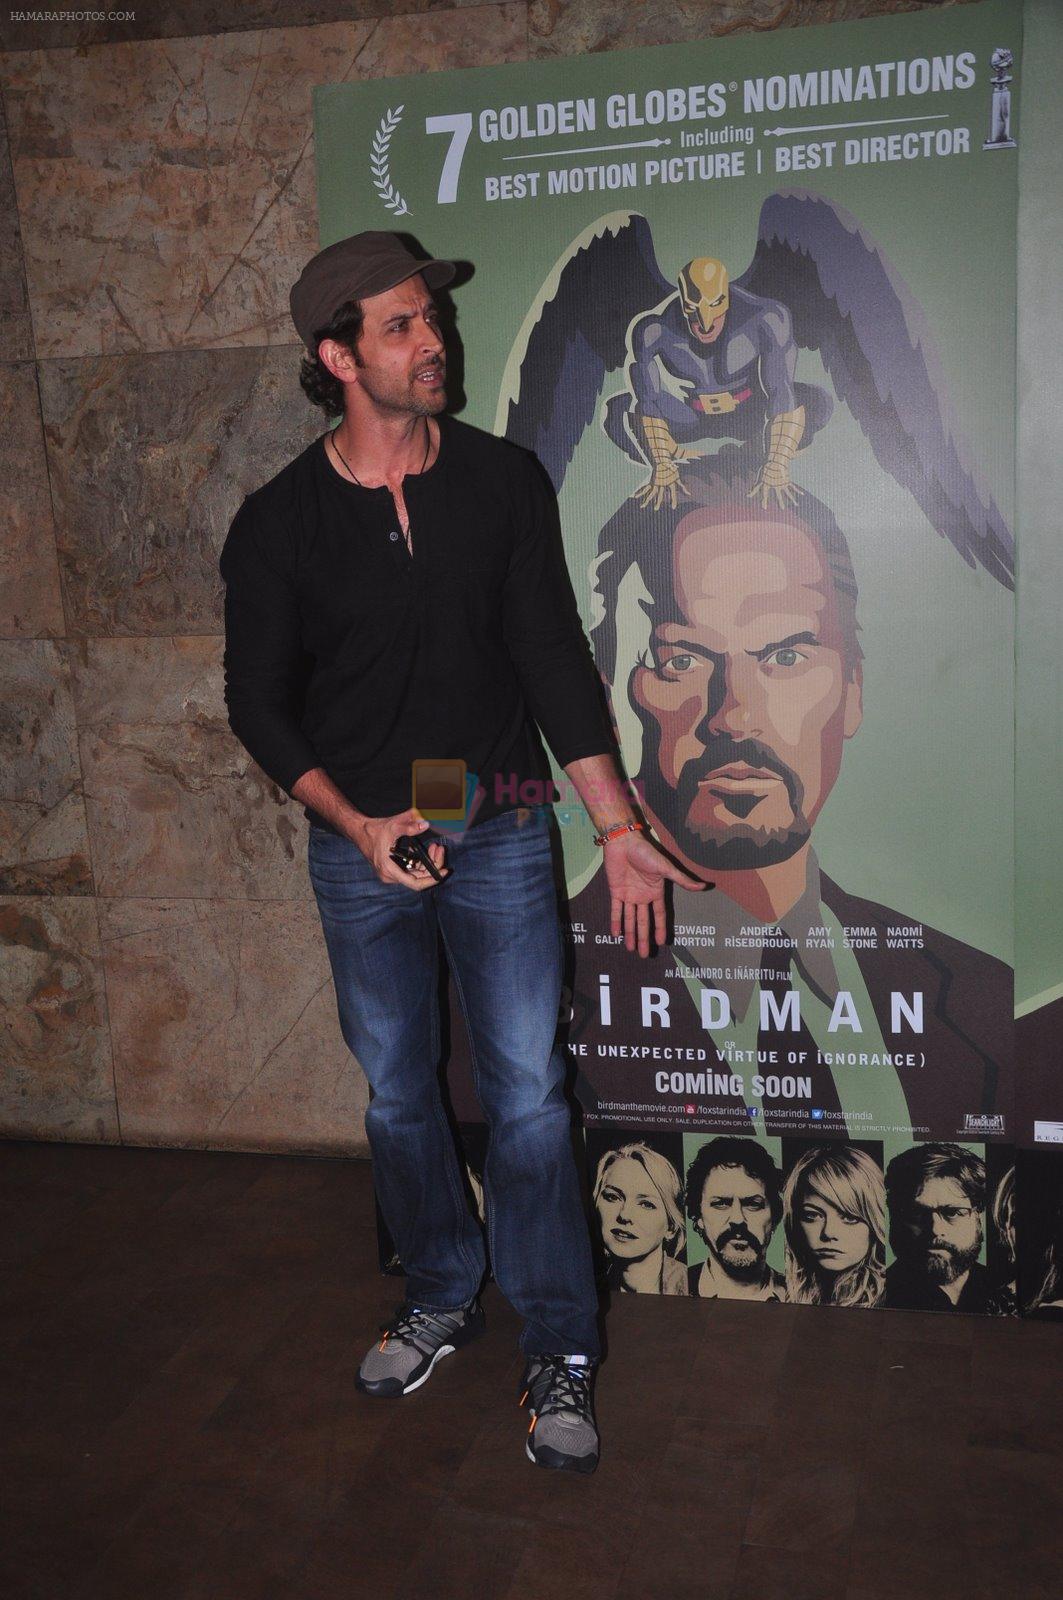 Hrithik Roshan at Birdman screening in Lightbox, Mumbai on 16th Jan 2015